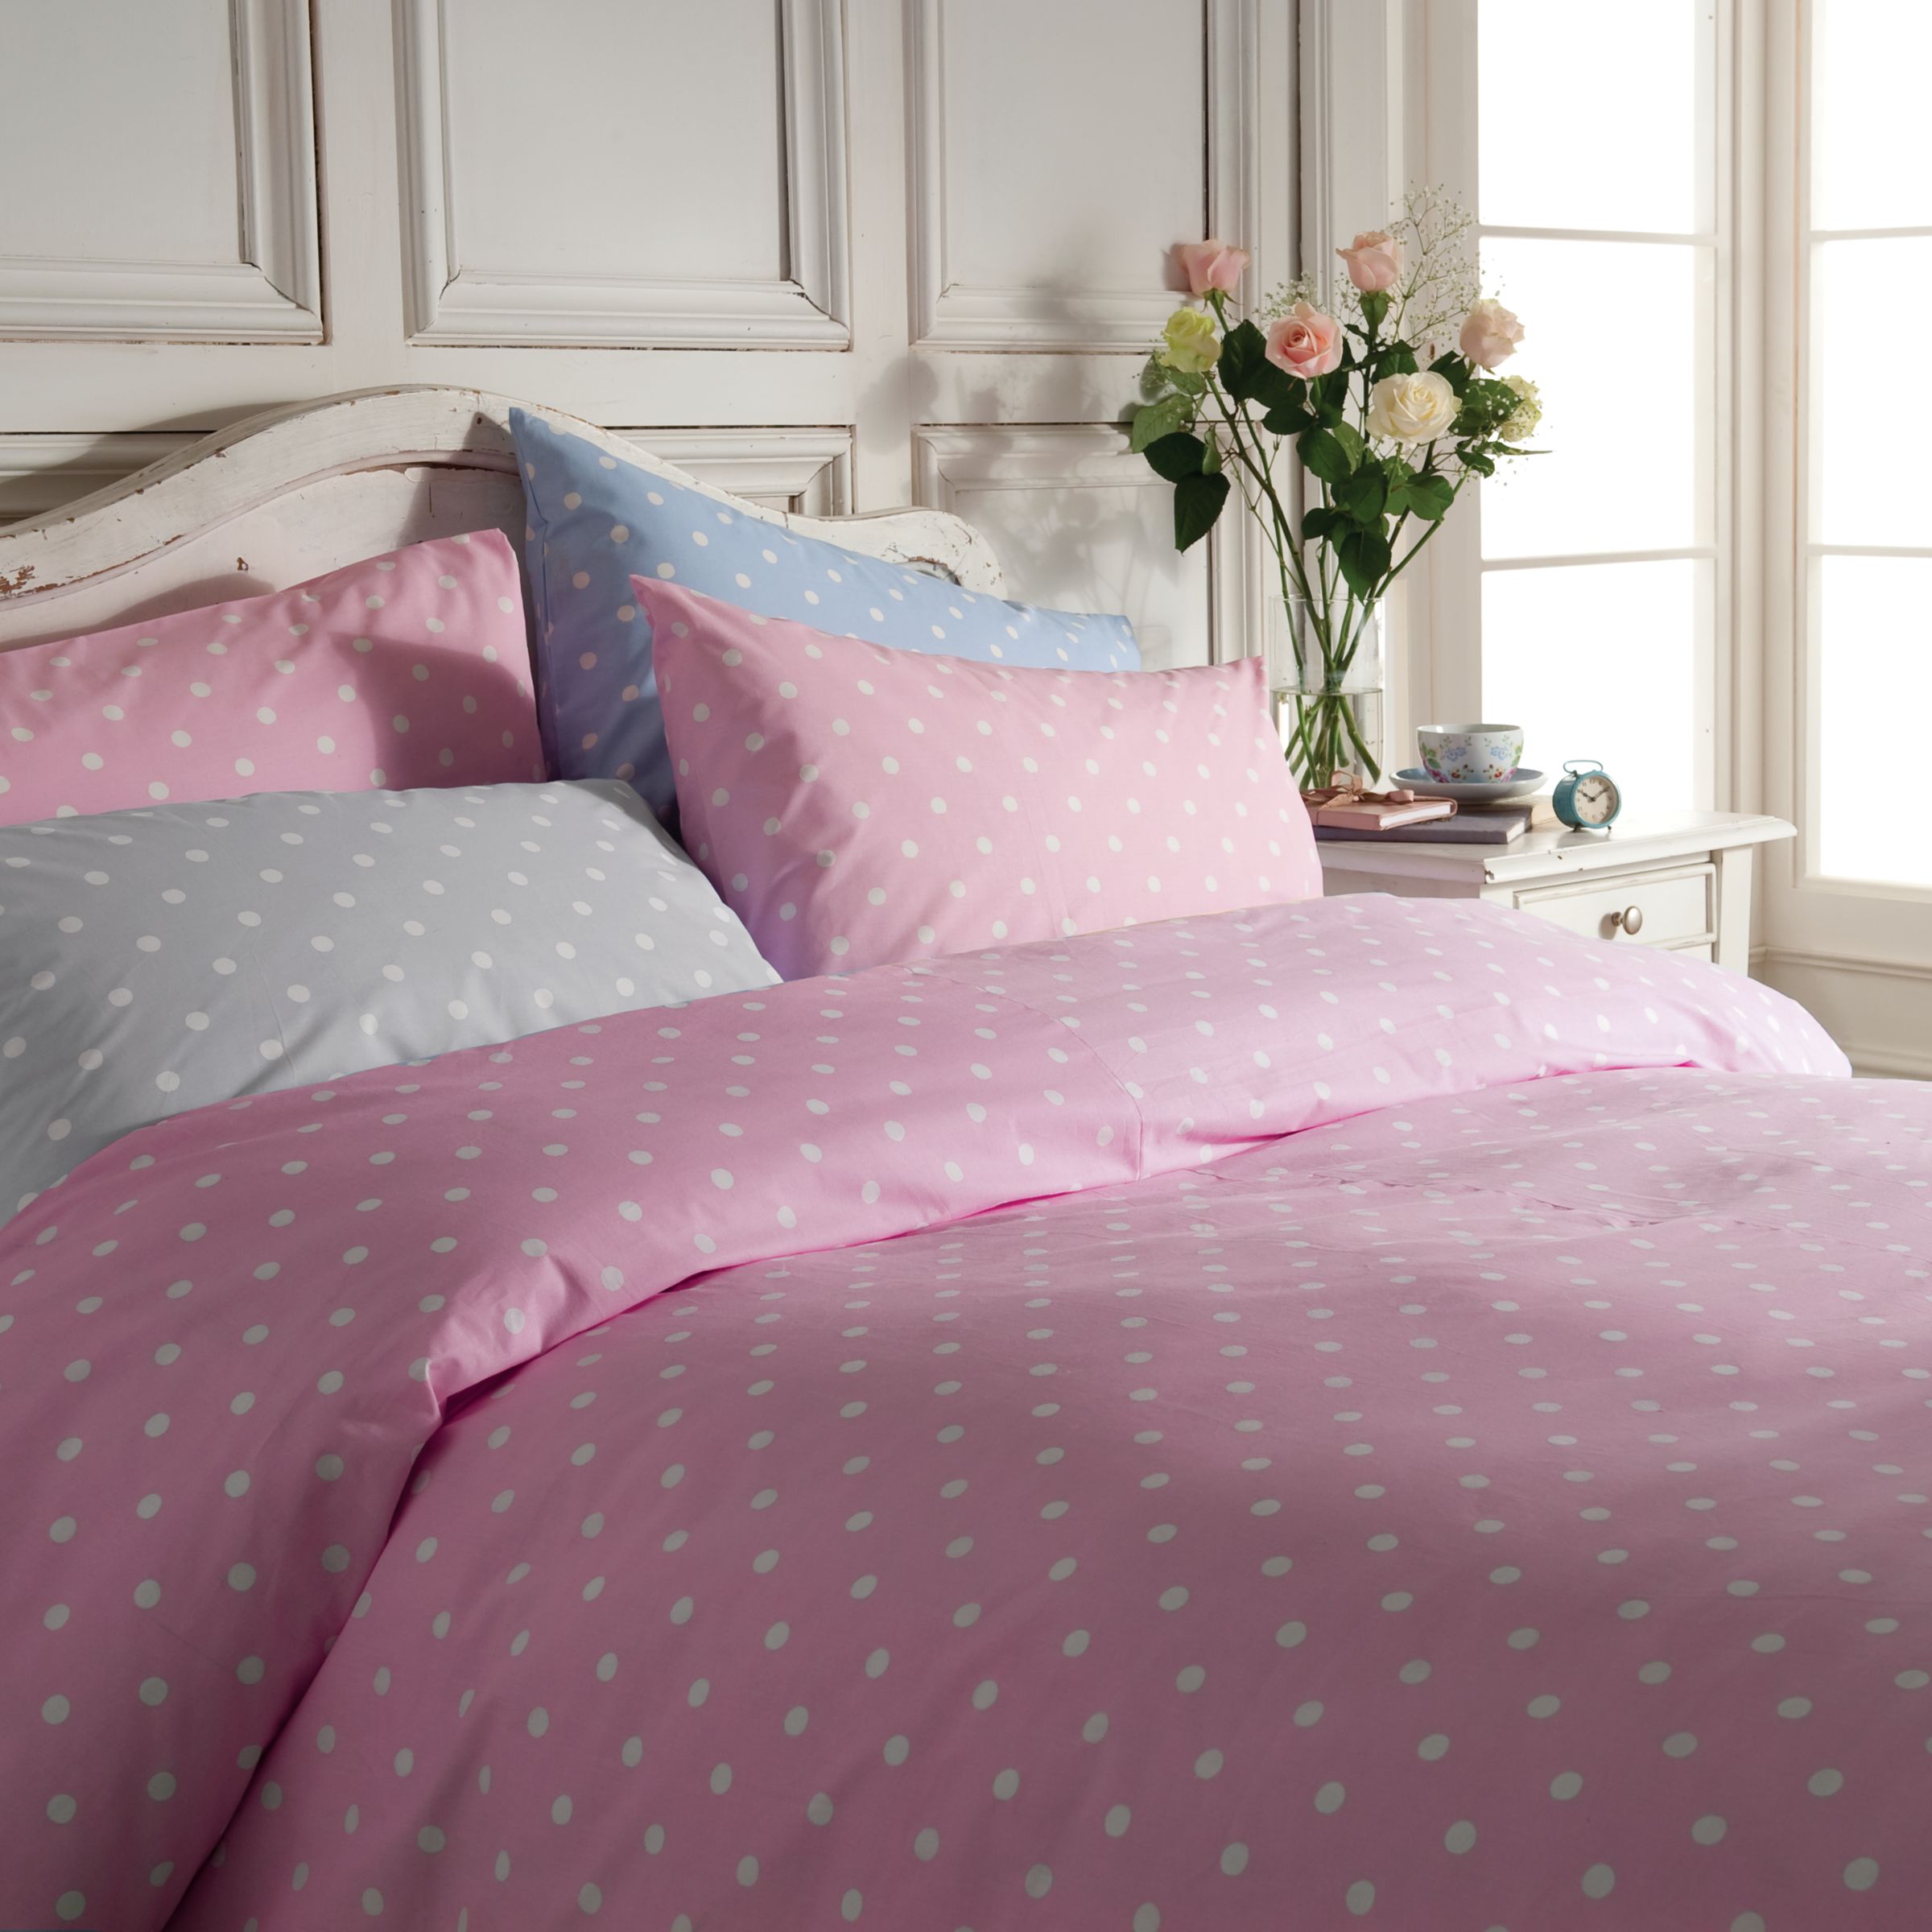 Cath Kidston Large Spot Bedding, Pink / White